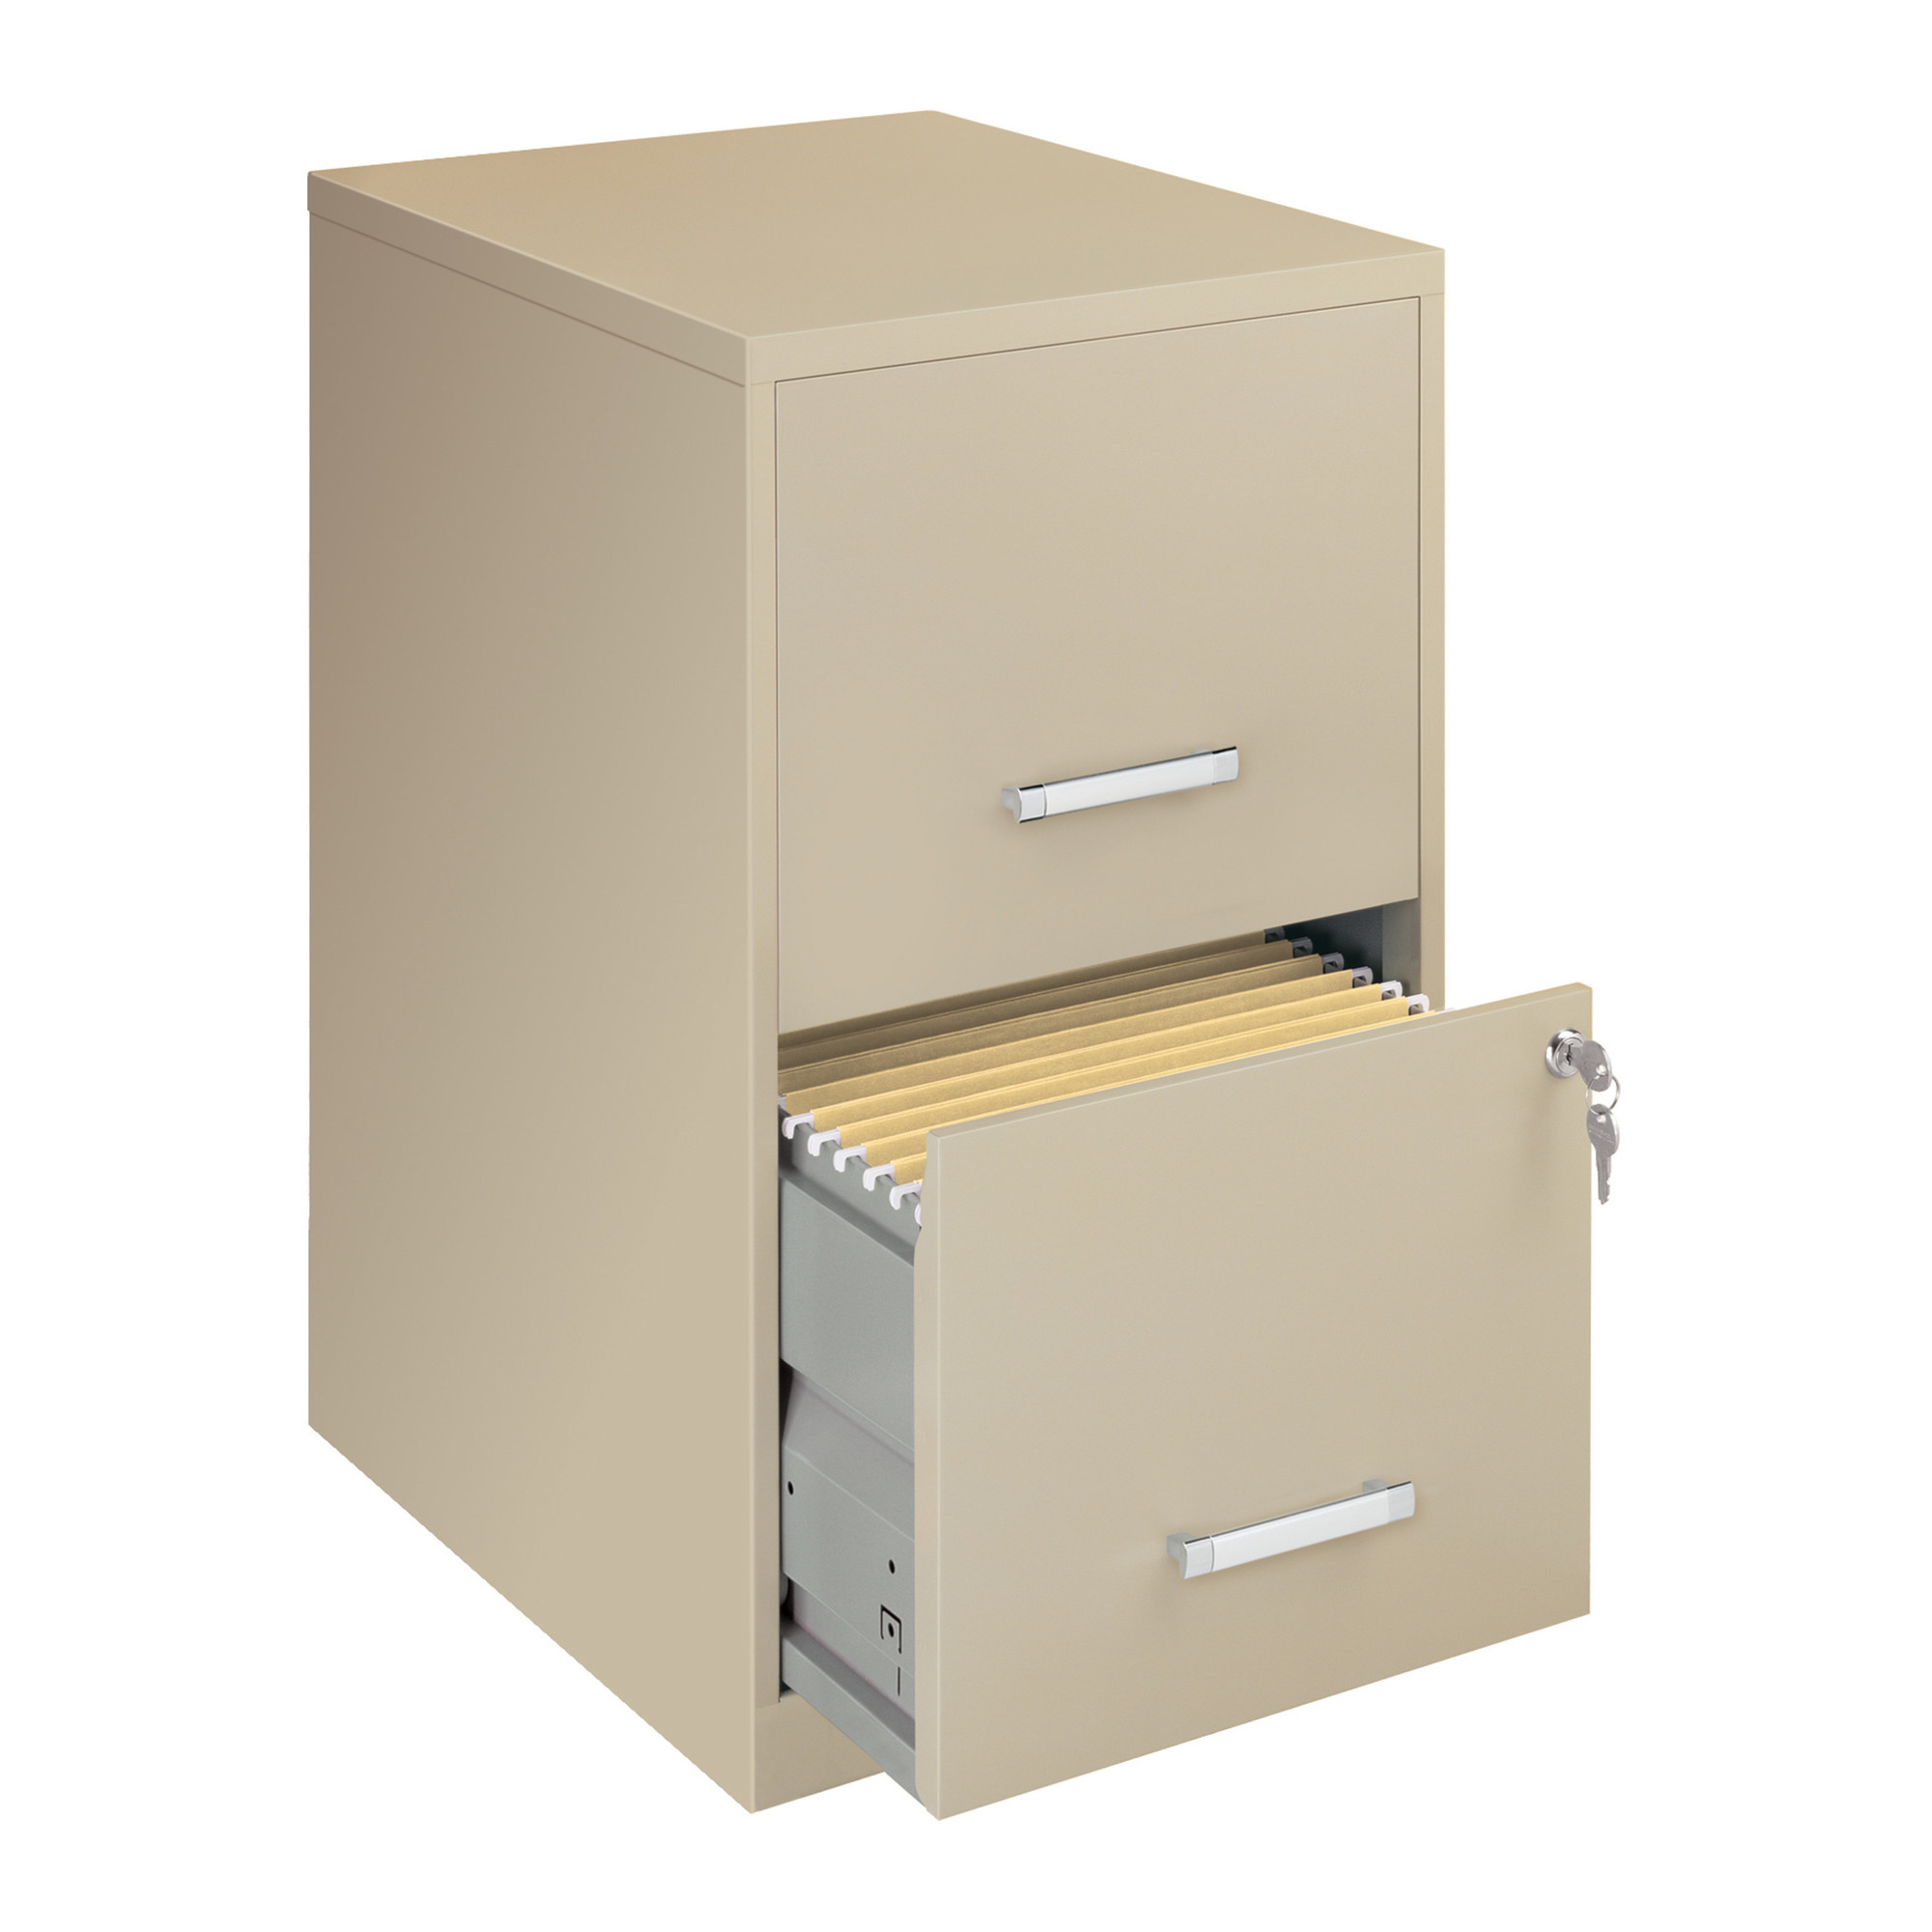 Hirsh Industries, 2 Drawer Letter Width Vertical File Cabinet, Width 14.25 in, Depth 18 in, Height 24.5 in, Model 14340